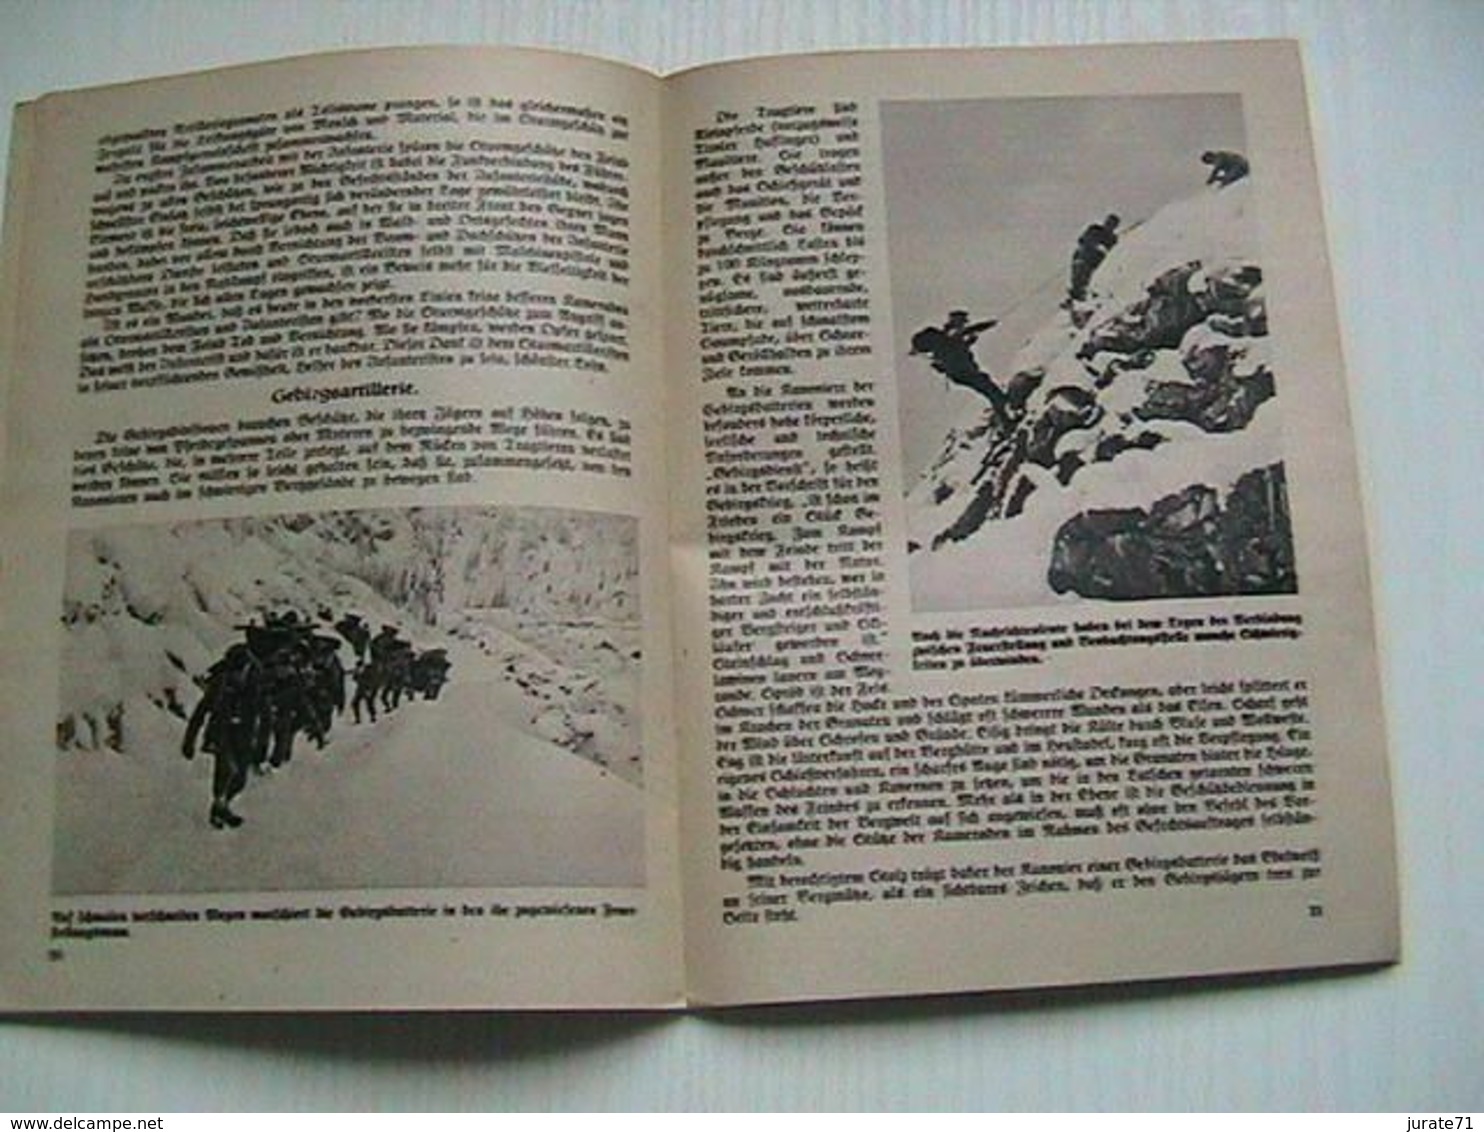 Waffenhefte des Heeres, Die Artillerie, Magazine for Hitler-Youth,HJ,DJ,Pimpfe